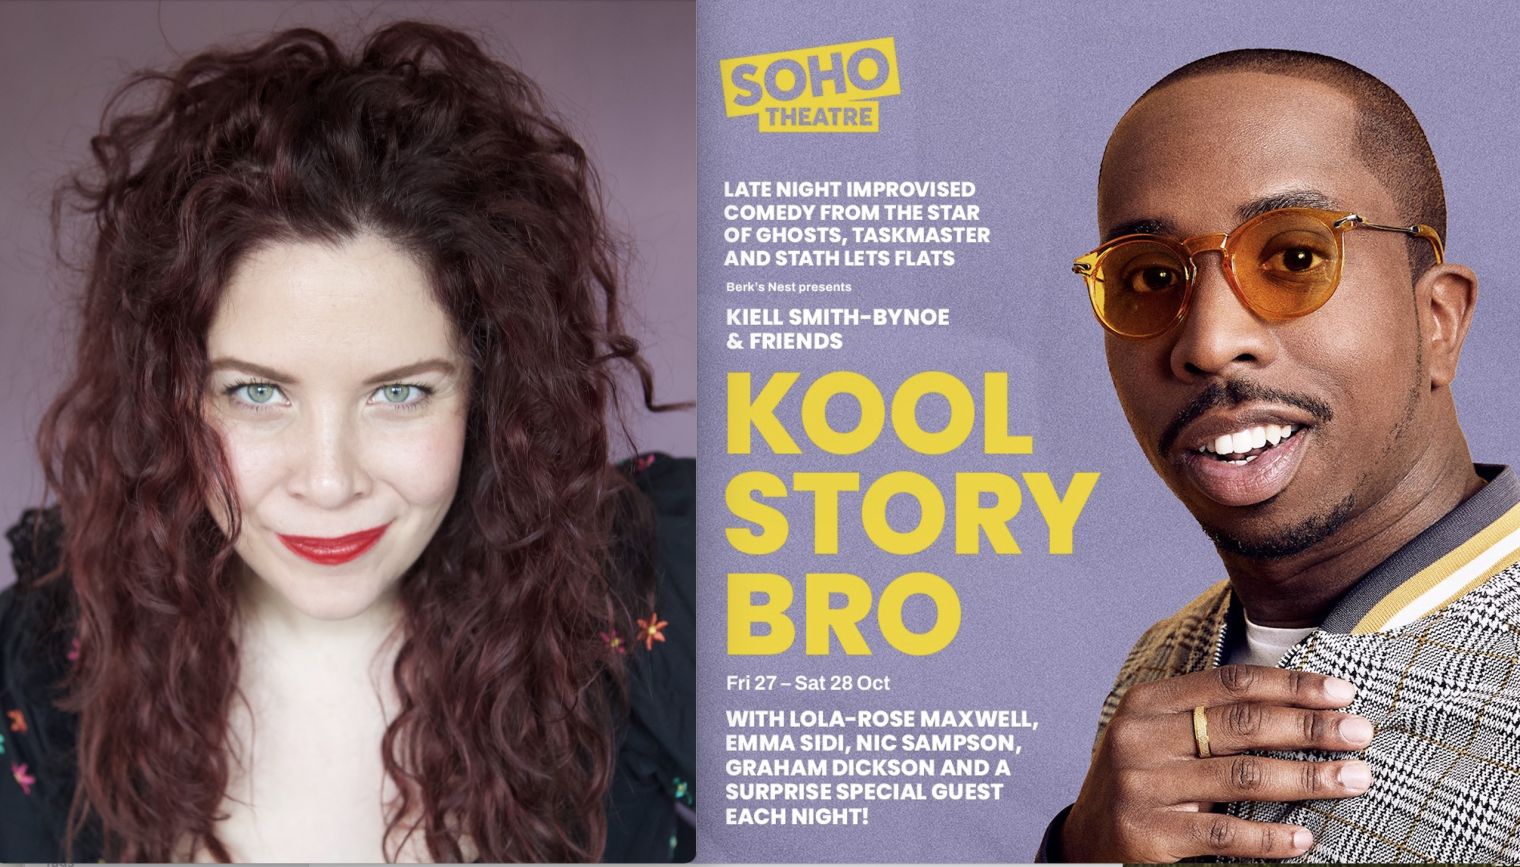 See Lola-Rose Maxwell at the Soho Theatre this weekend in Kiell Smith-Bynoe’s hit improv show‘Kool Story Bro’